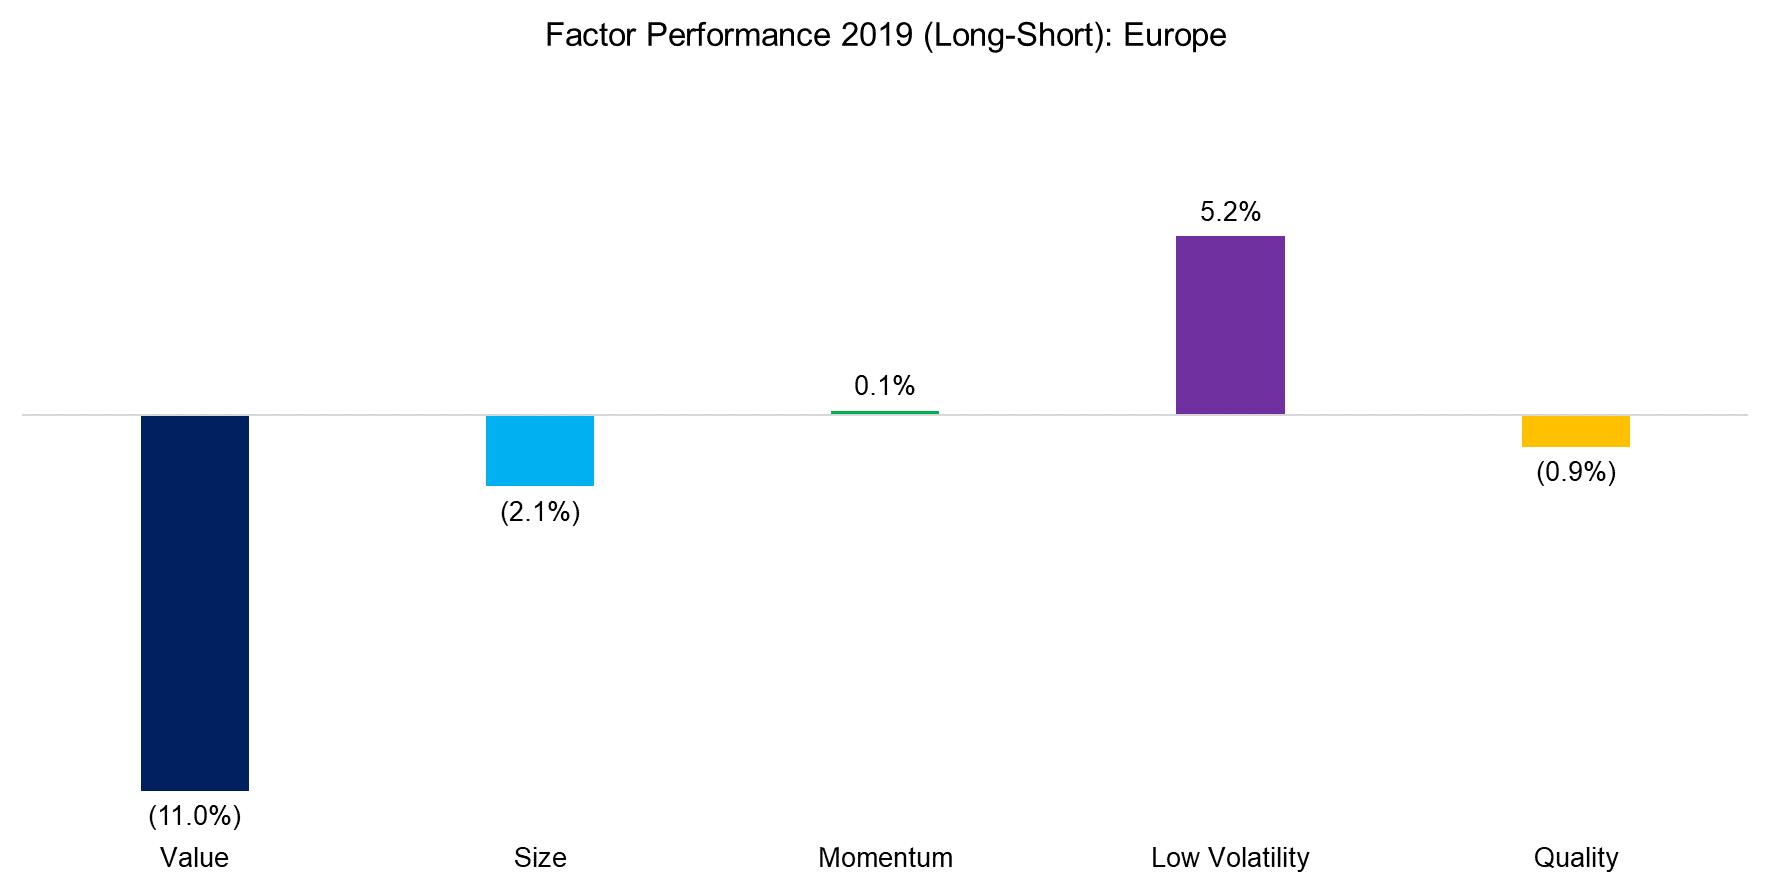 Factor Performance 2019 (Long-Short) Europe